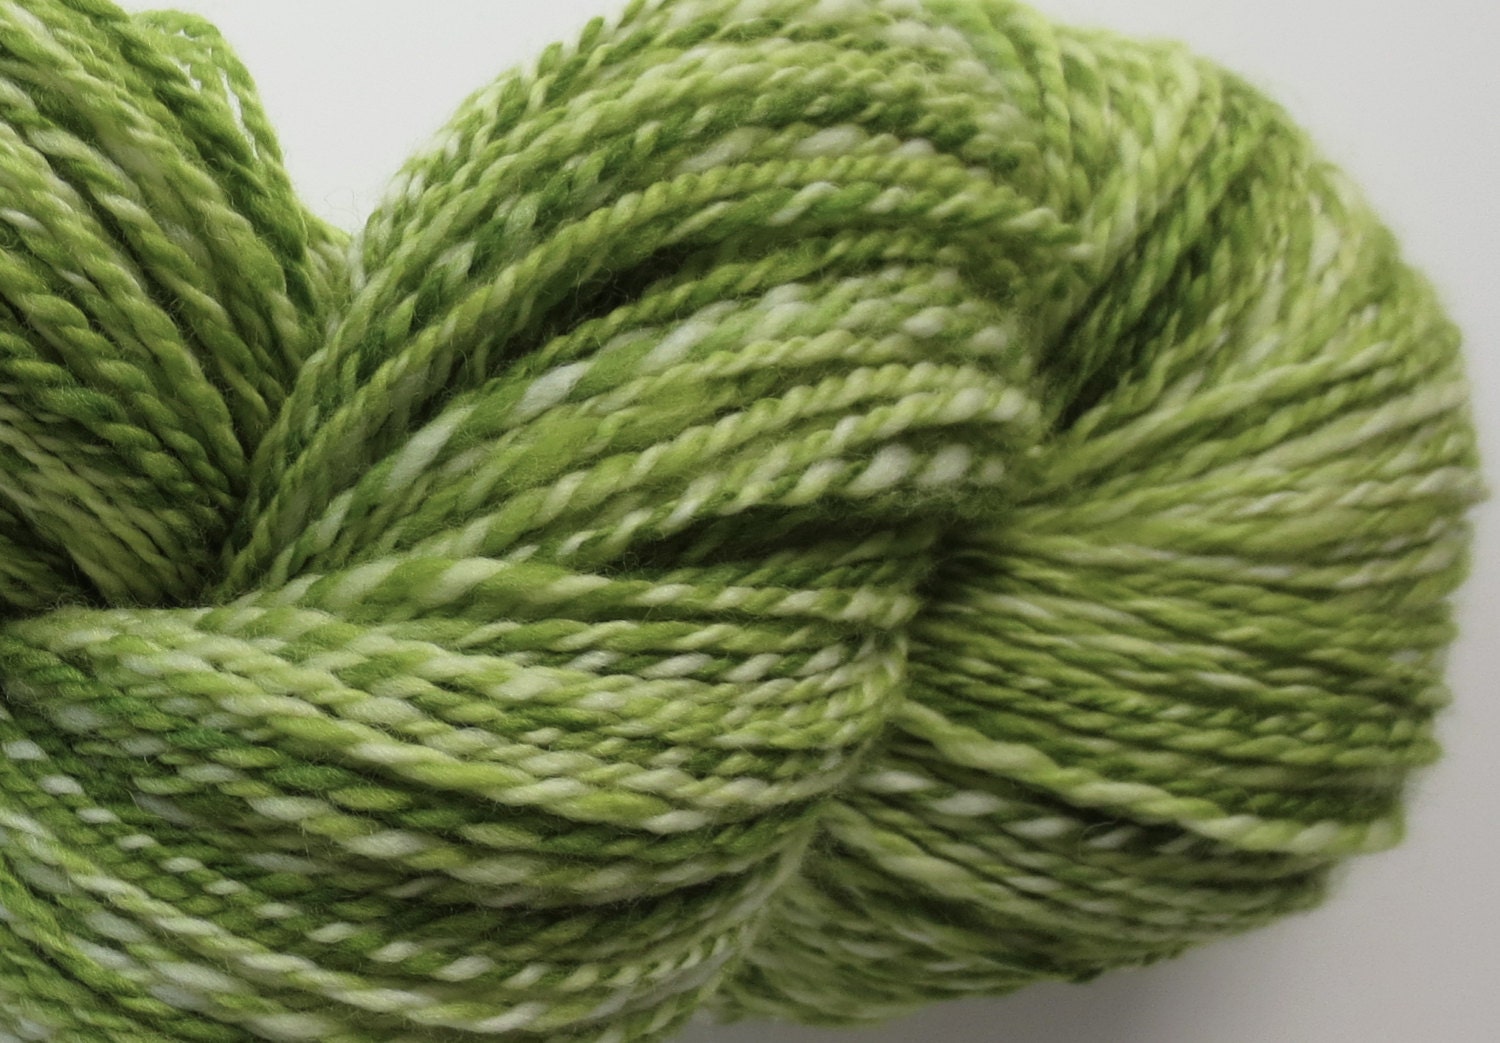 Spring Green Superwash Merino Handspun yarn 338 yards, DK- Light worsted weight